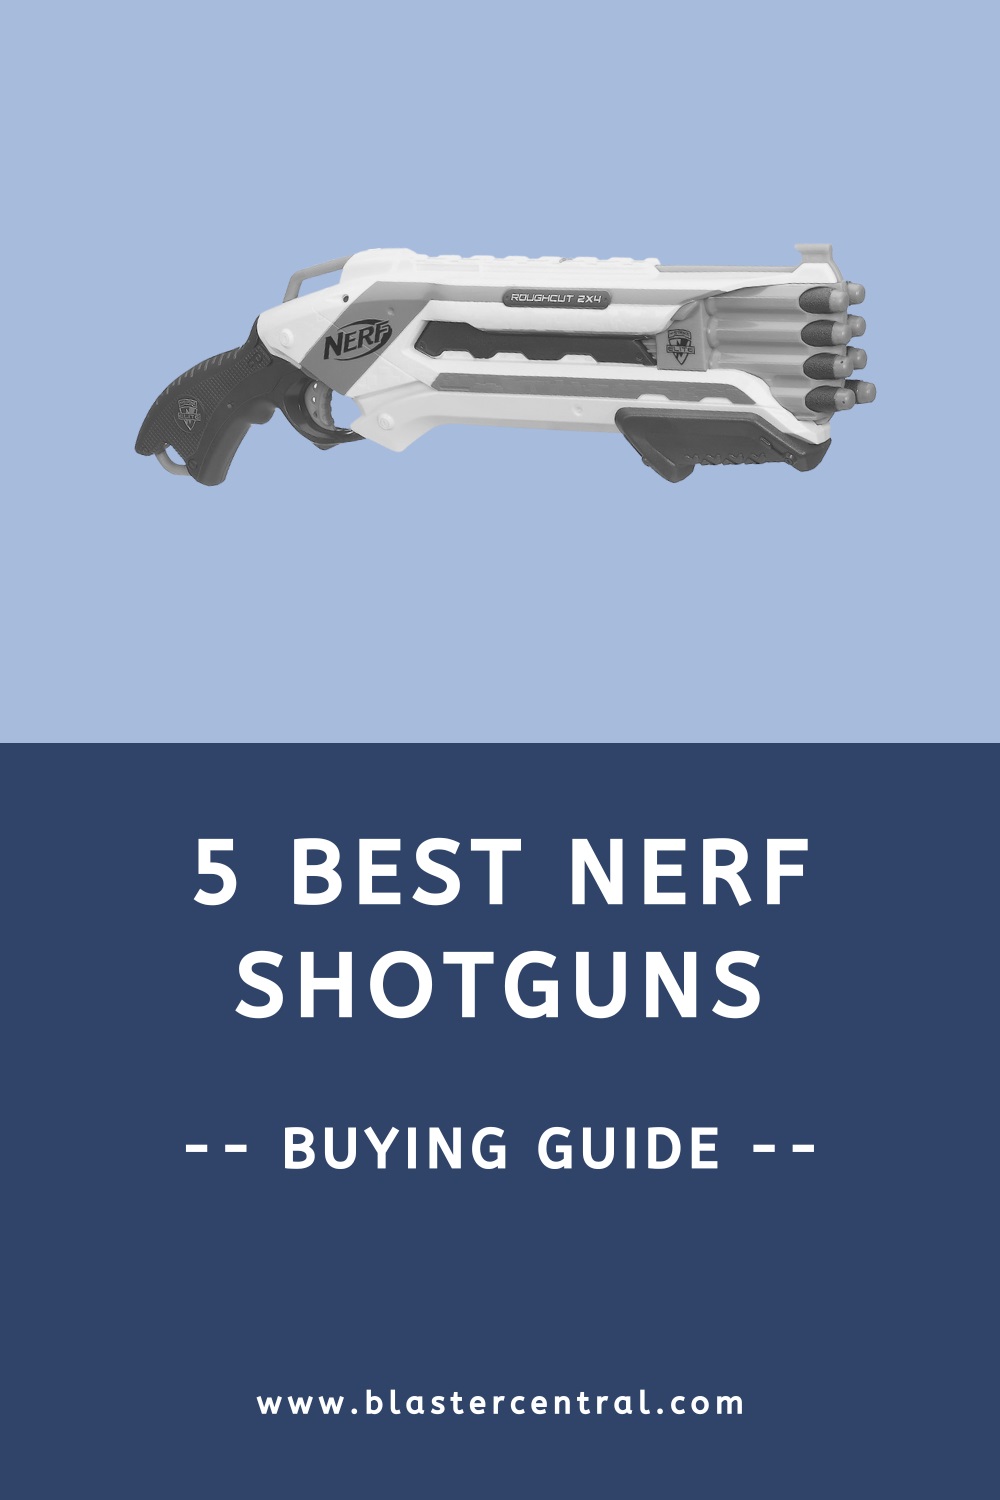 5 Best Nerf shotguns (buying guide)